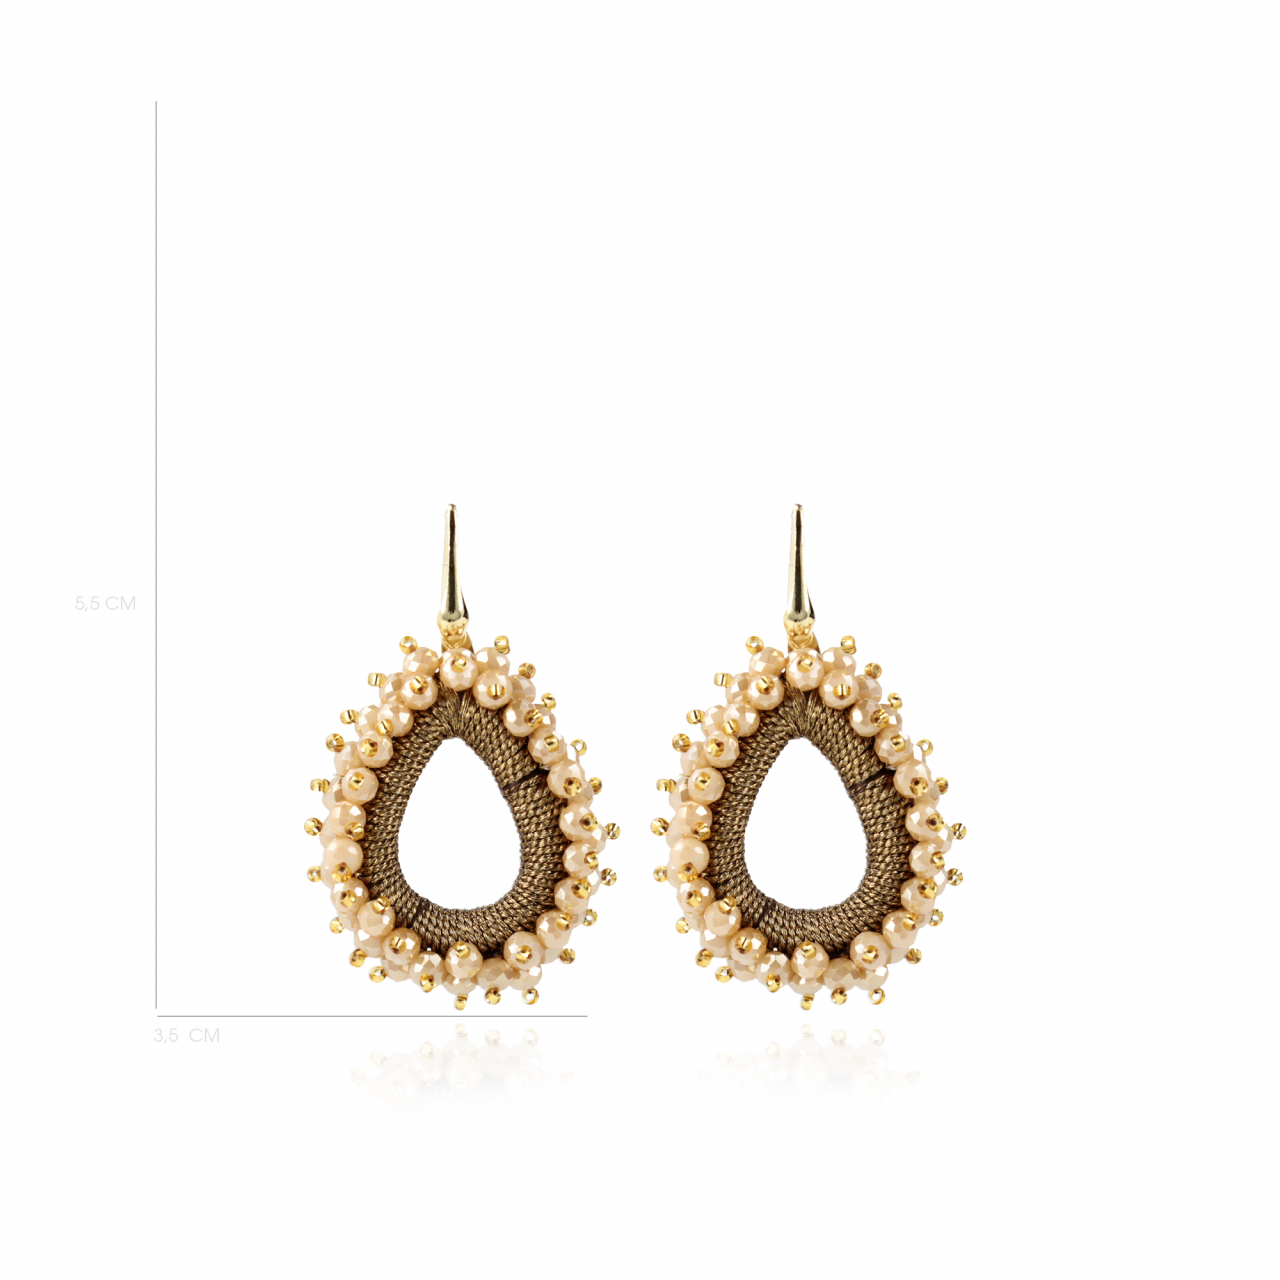 Carina Cappuccino Earrings Urchin Drop M lott-theme.productDescriptionPage.SEO.byTheBrand